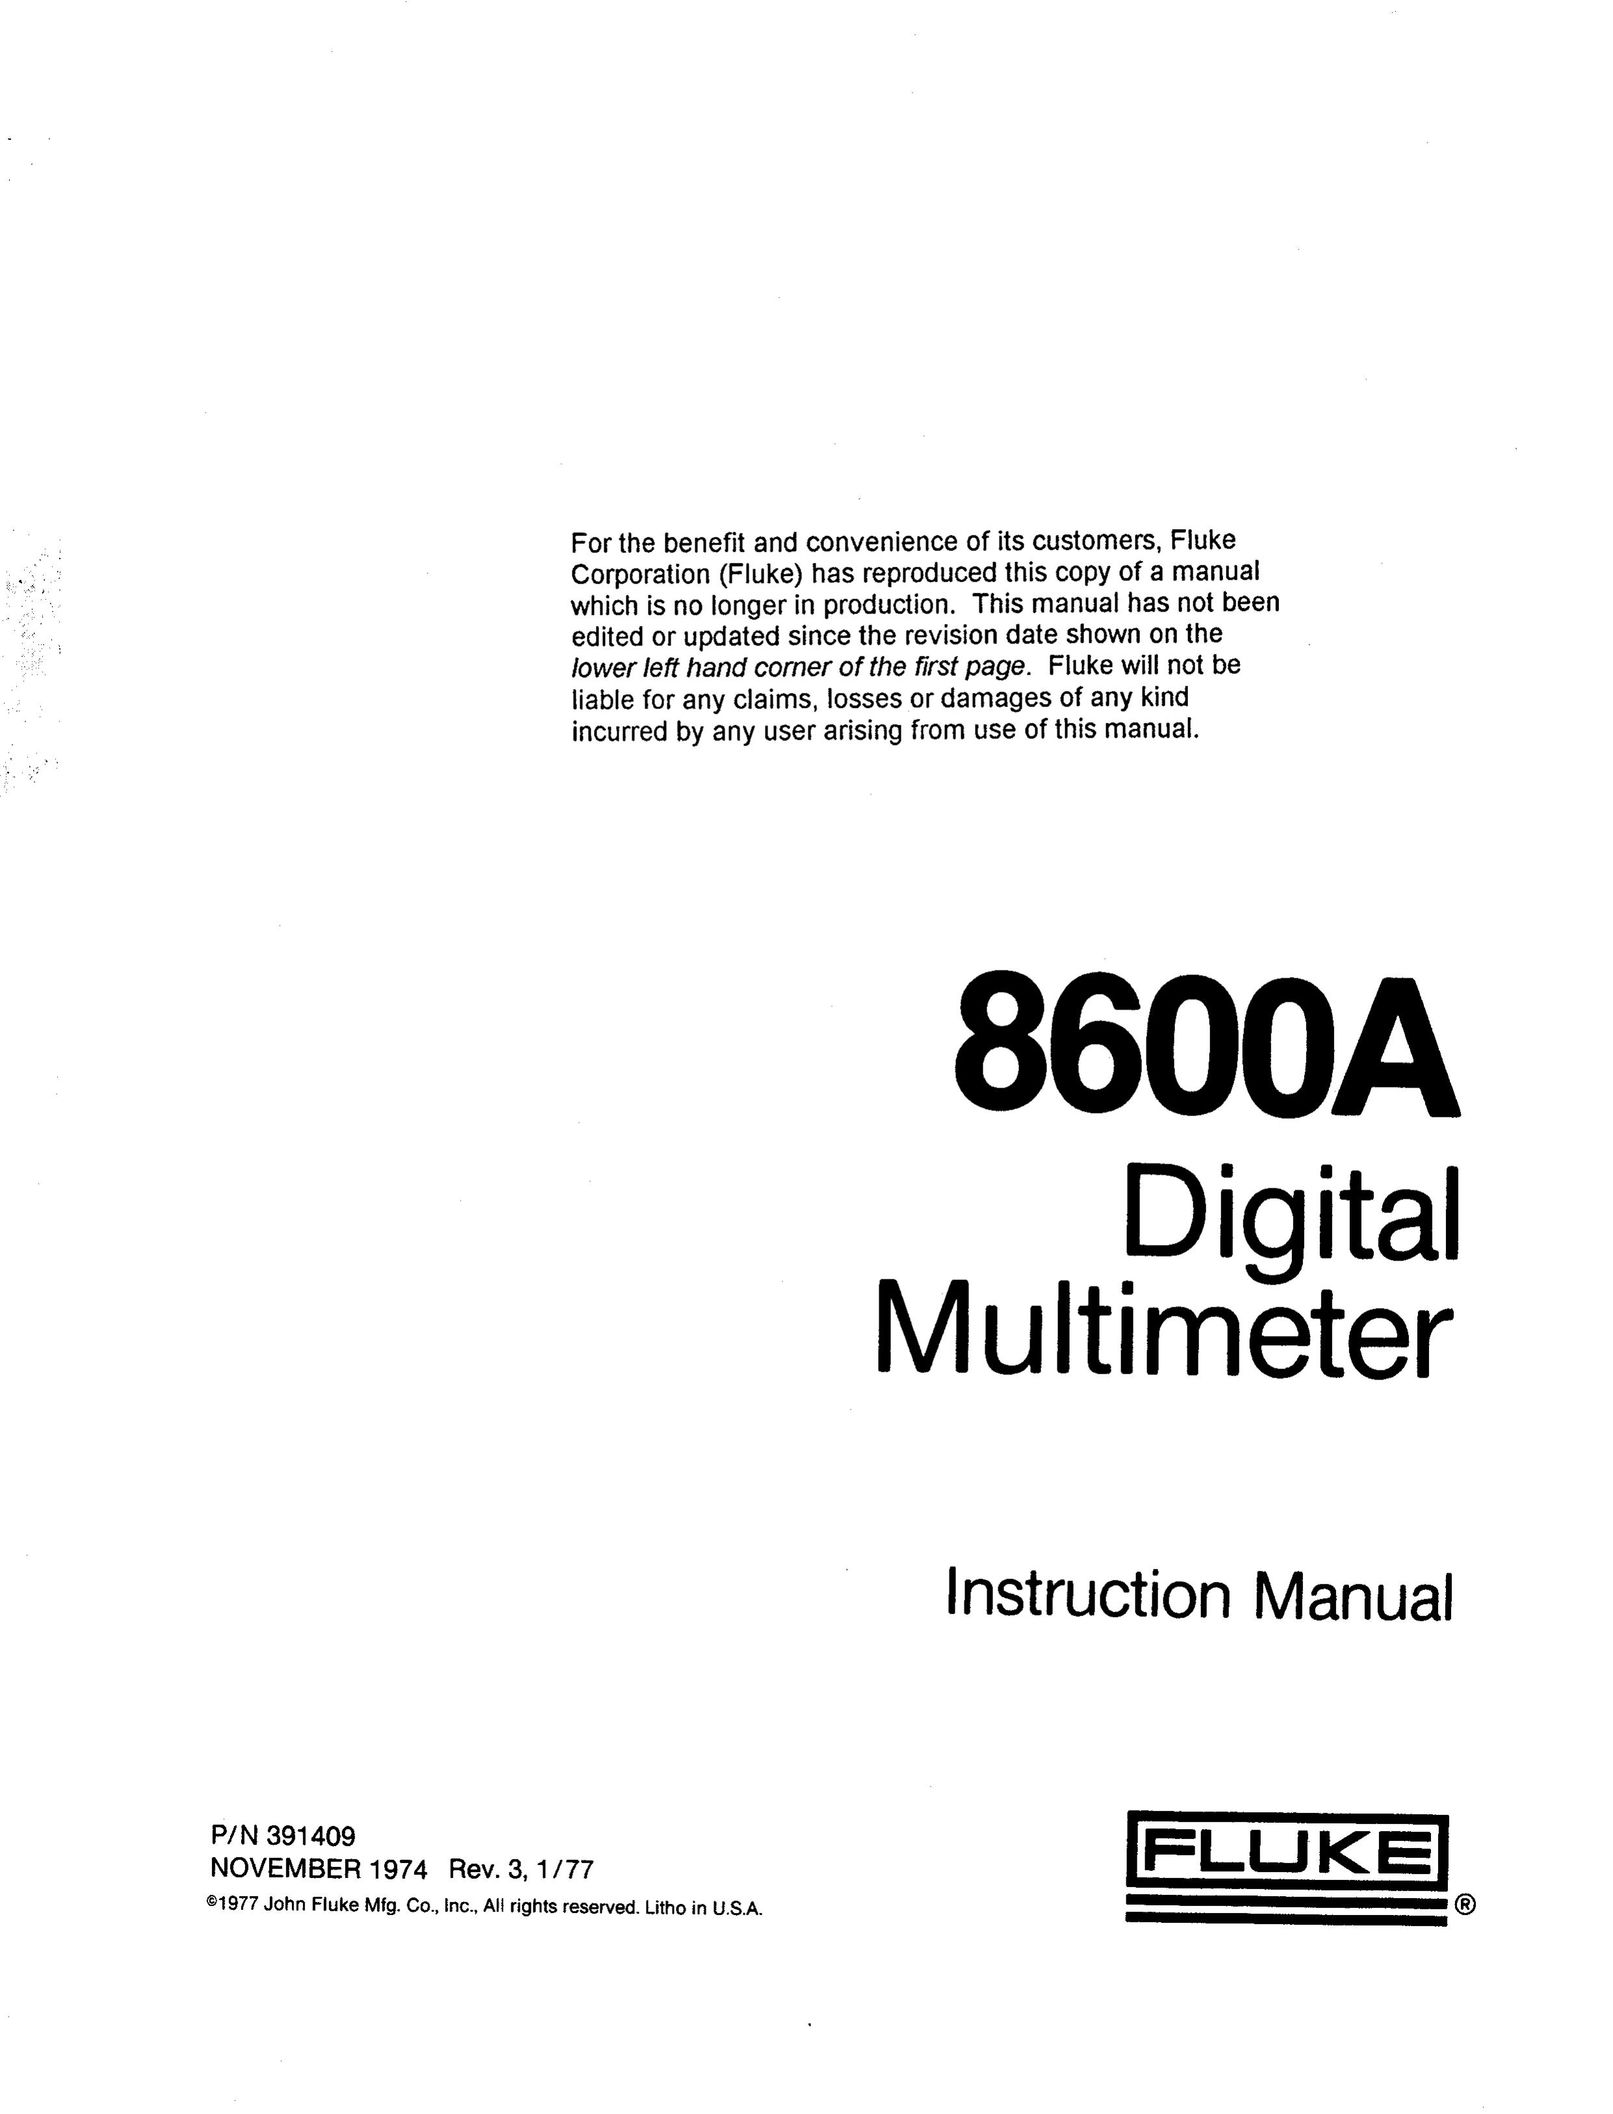 Fluke 8600A Video Game Keyboard User Manual